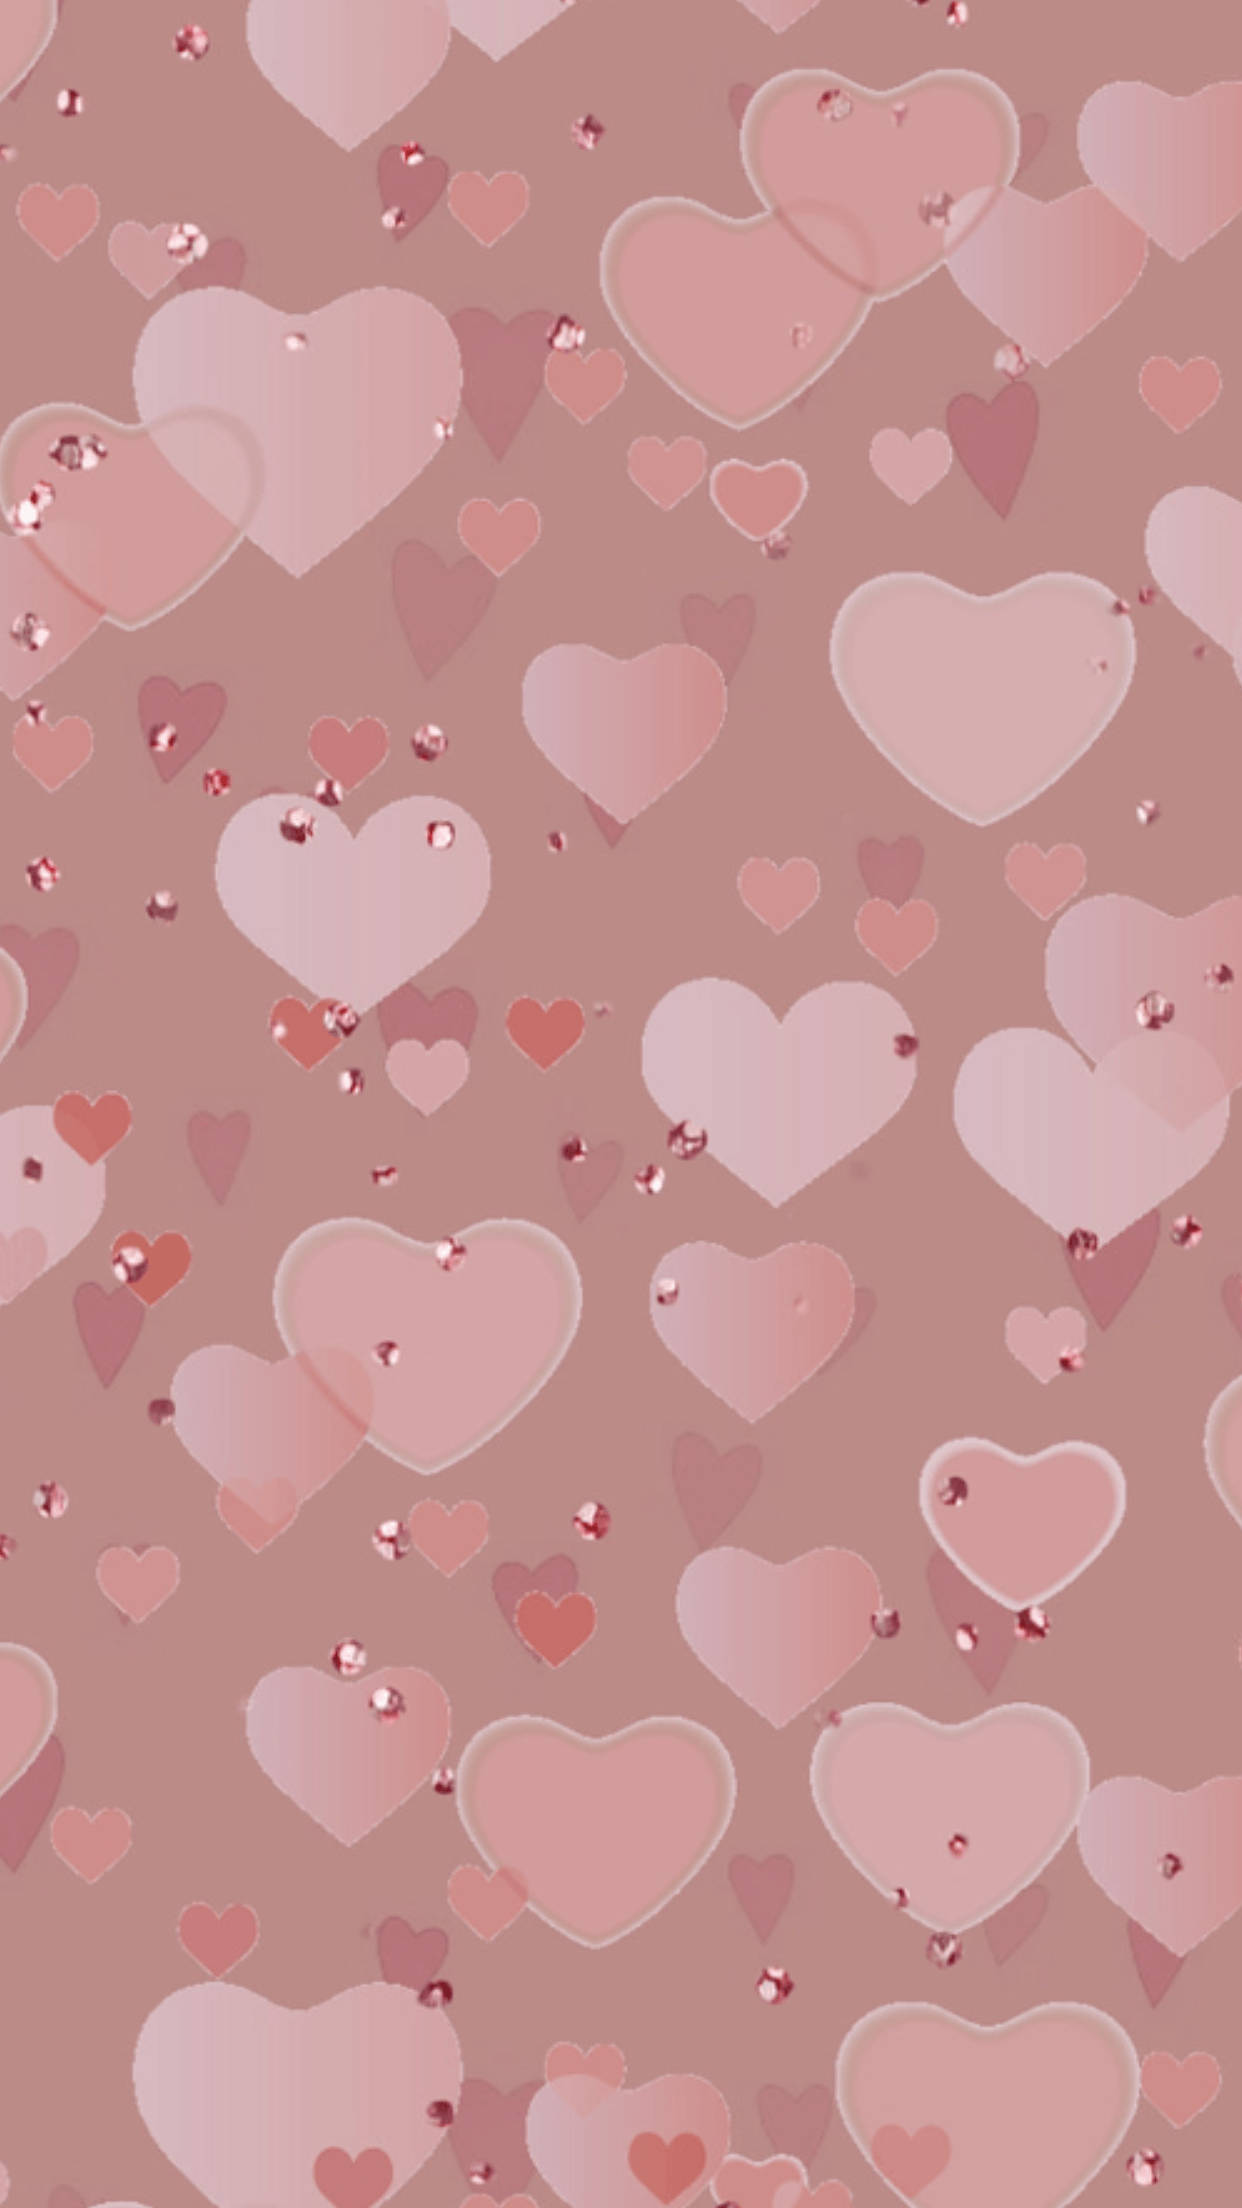 Cute Dreamy Love Heart Design Wallpaper